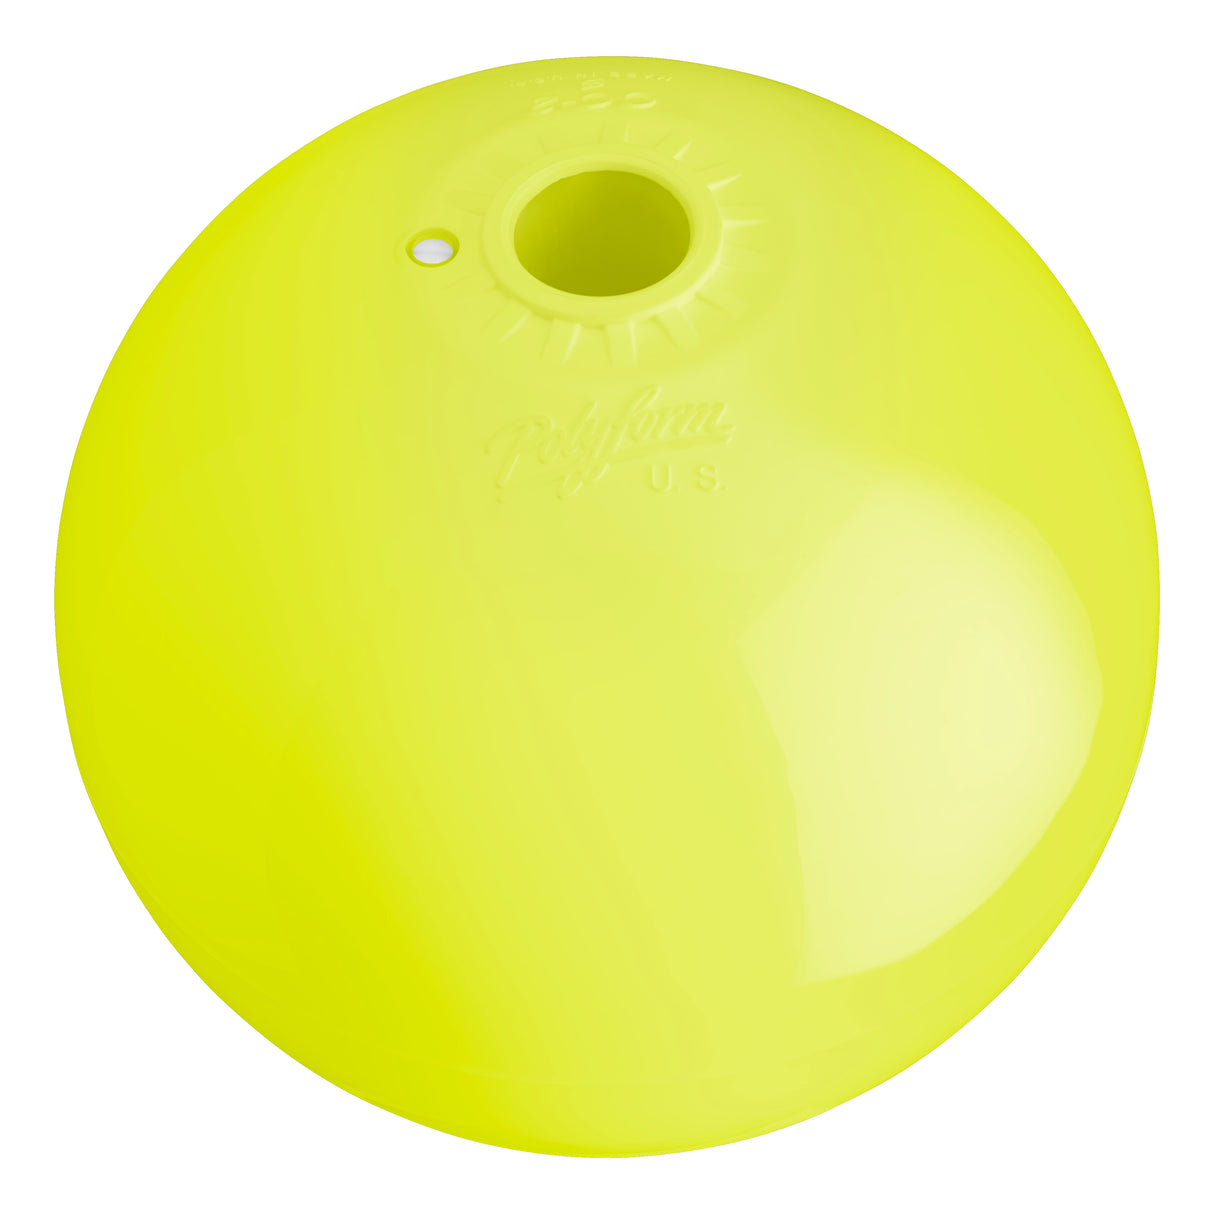 Hole through center mooring and marker buoy, Polyform CC-3 Saturn Yellow angled shot